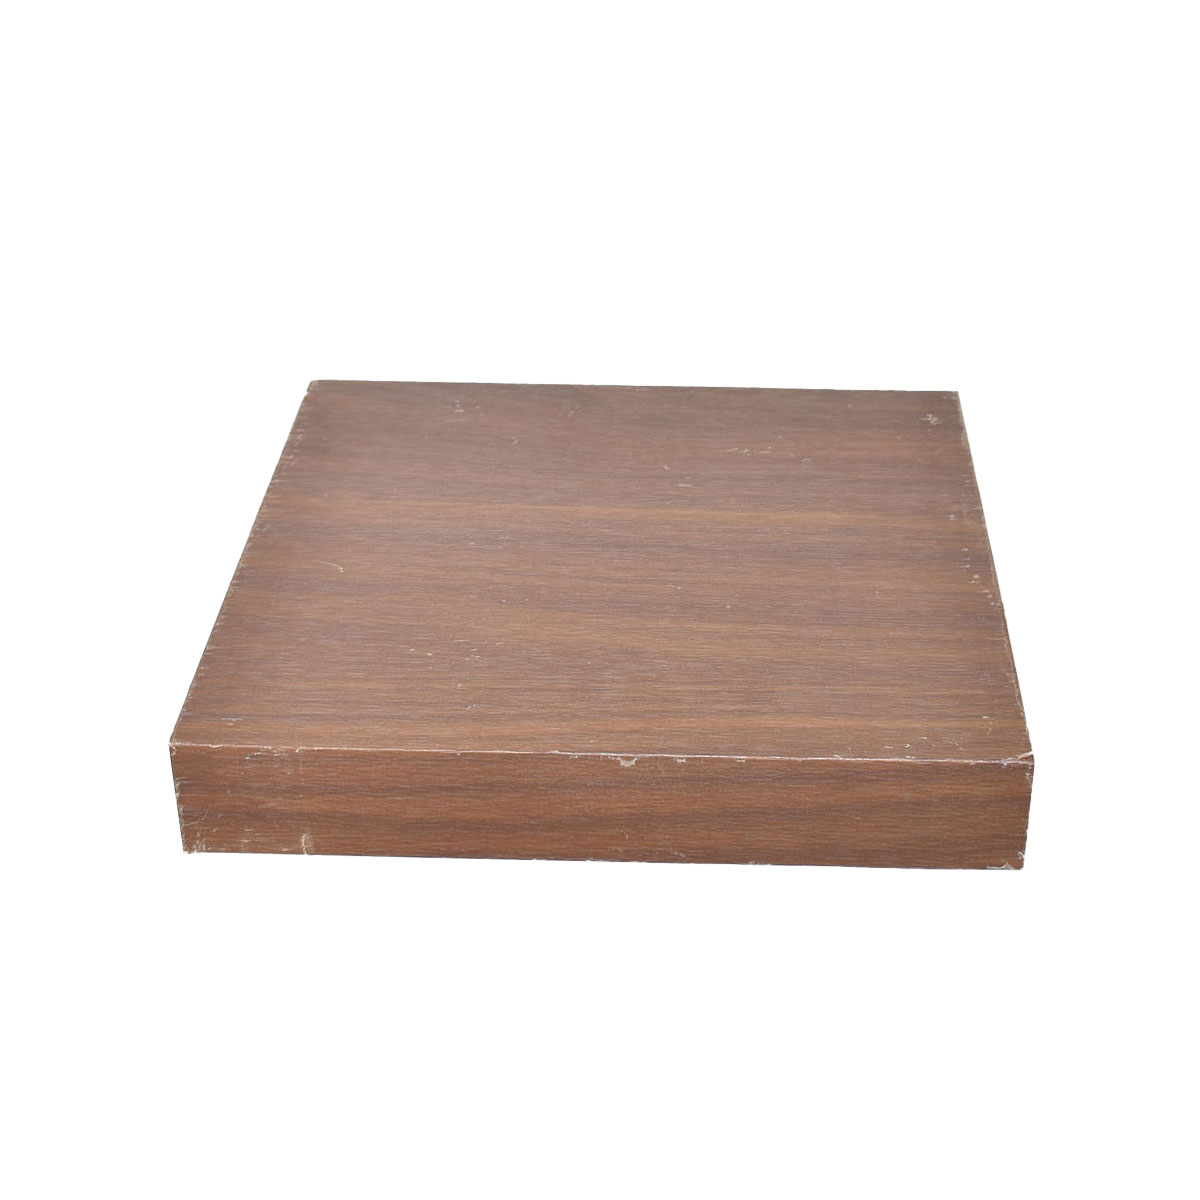 رف خشب مربع بني 23.5 × 23.5 × 3.8 سم